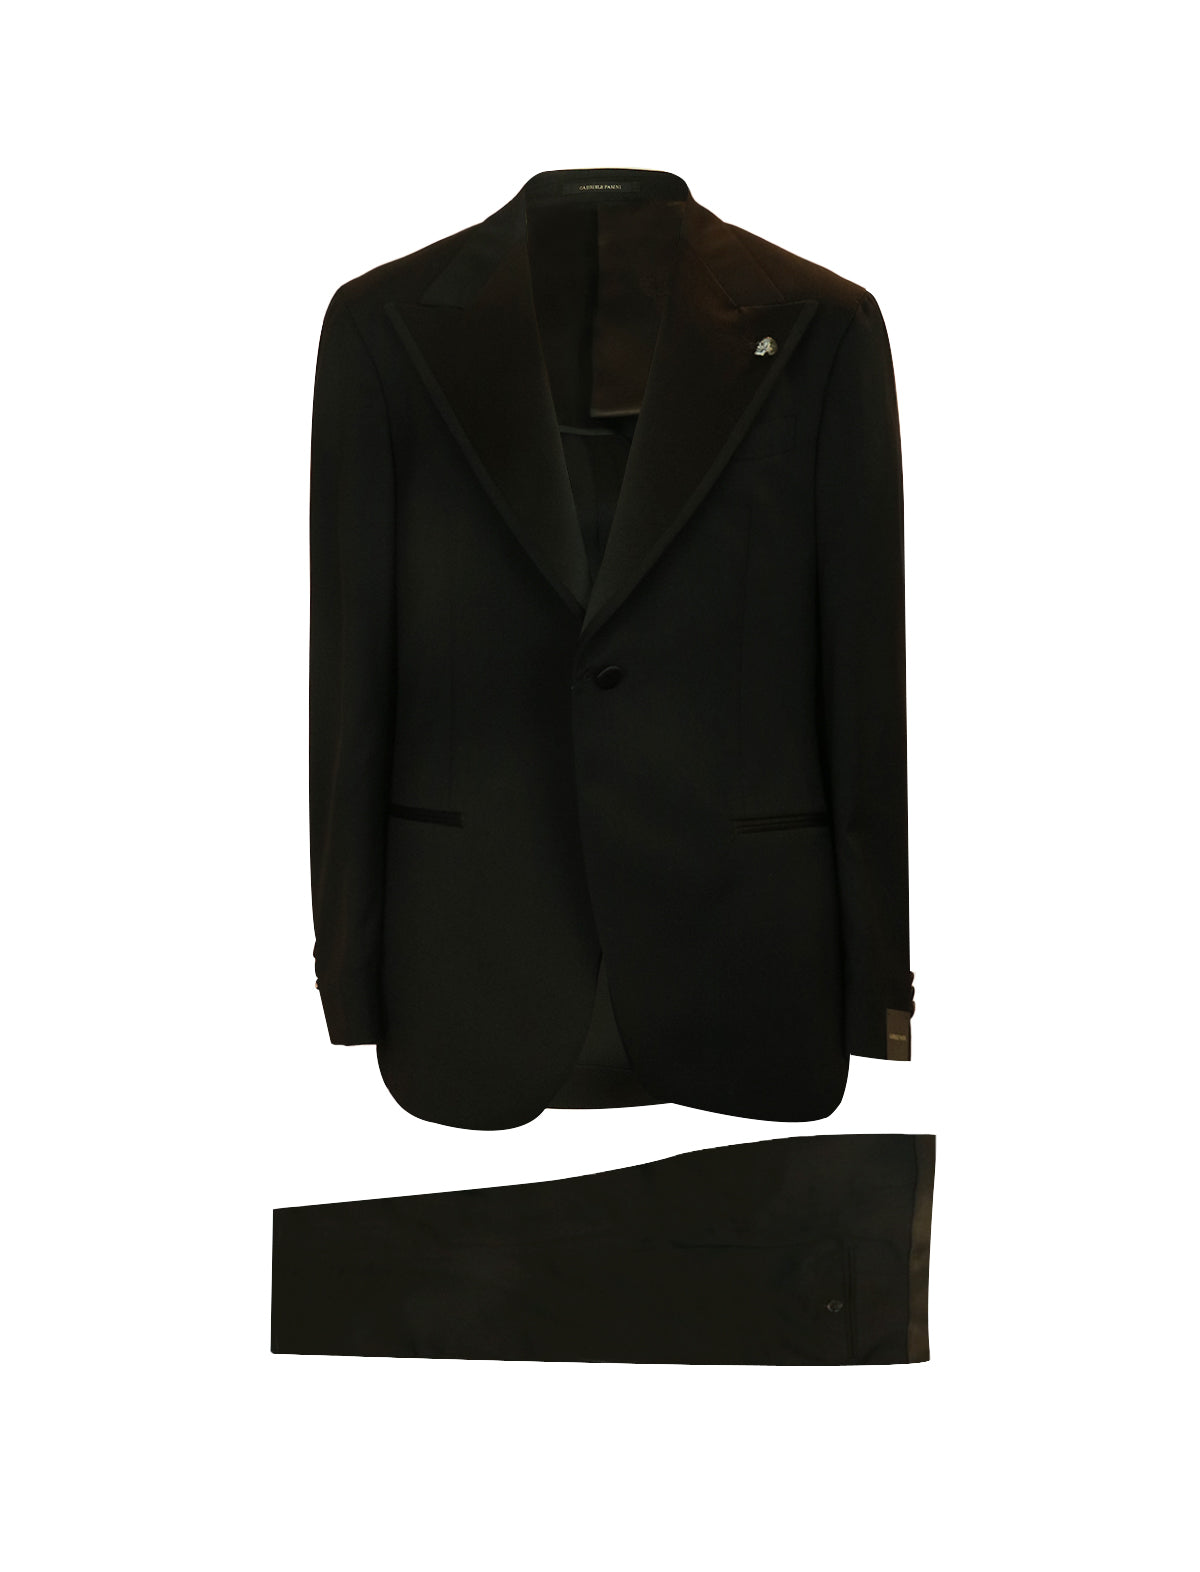 GABRIELE PASINI 2-Piece Formal Suit With Satin Revers In Black